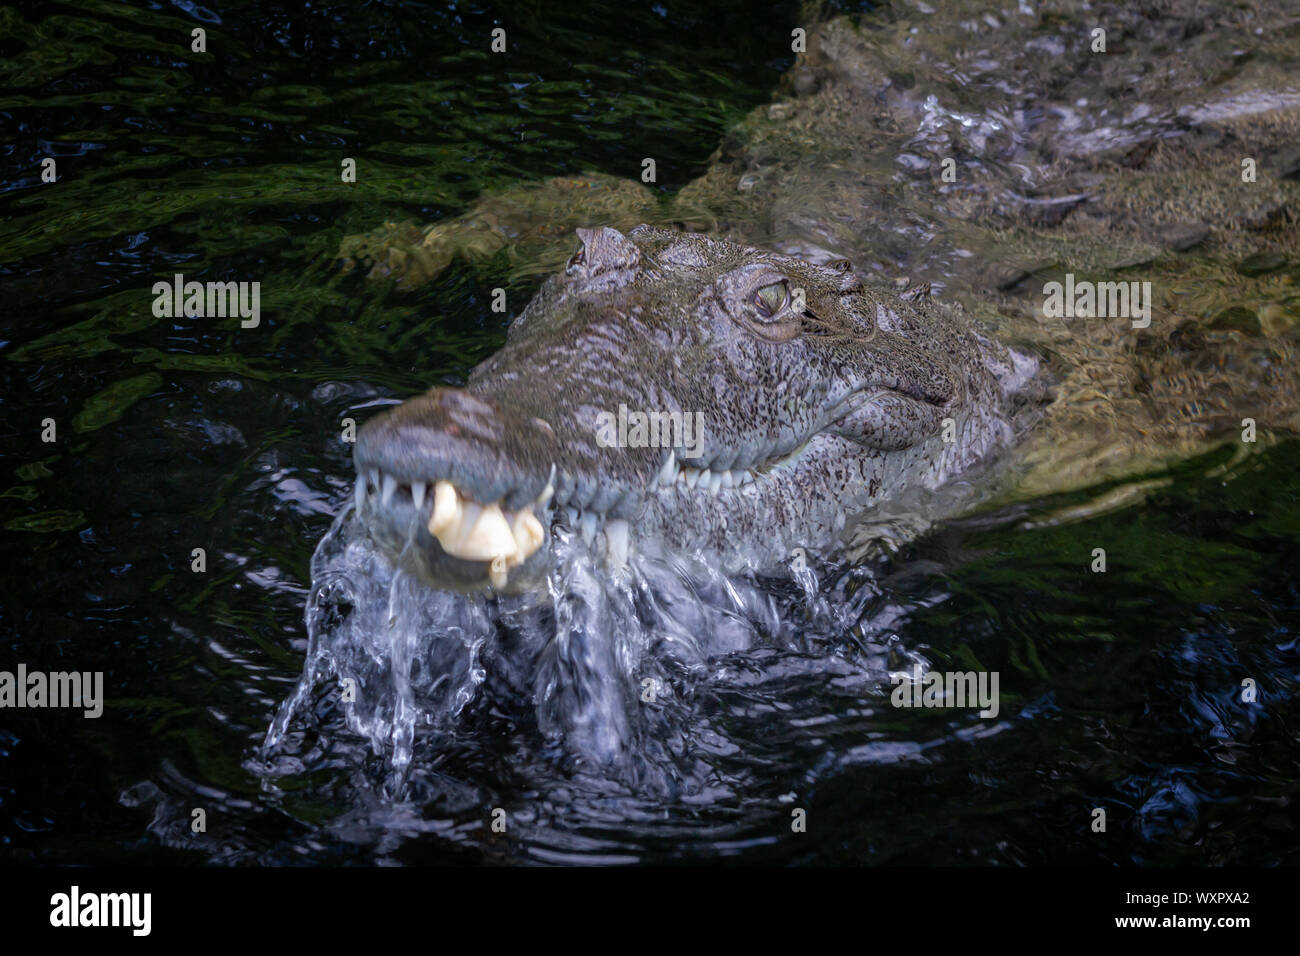 American Crocodile (crocodylus acutus) in a swamp in Black River, Jamaica Stock Photo